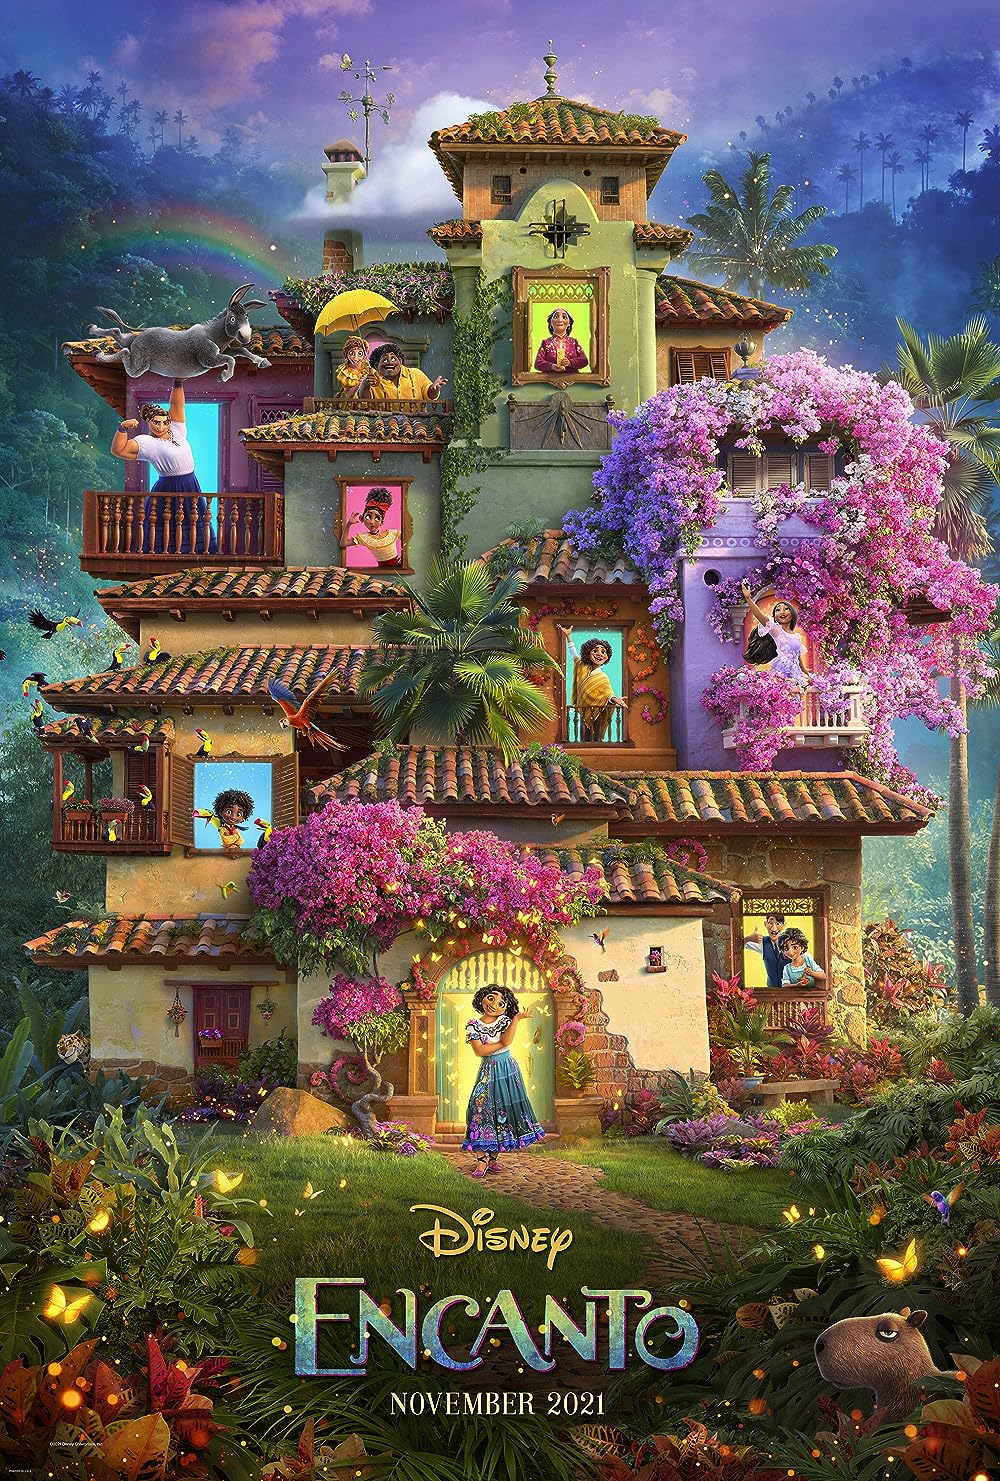 7. Encanto (2021): A Magical Colombian Family, Cartoon Movies